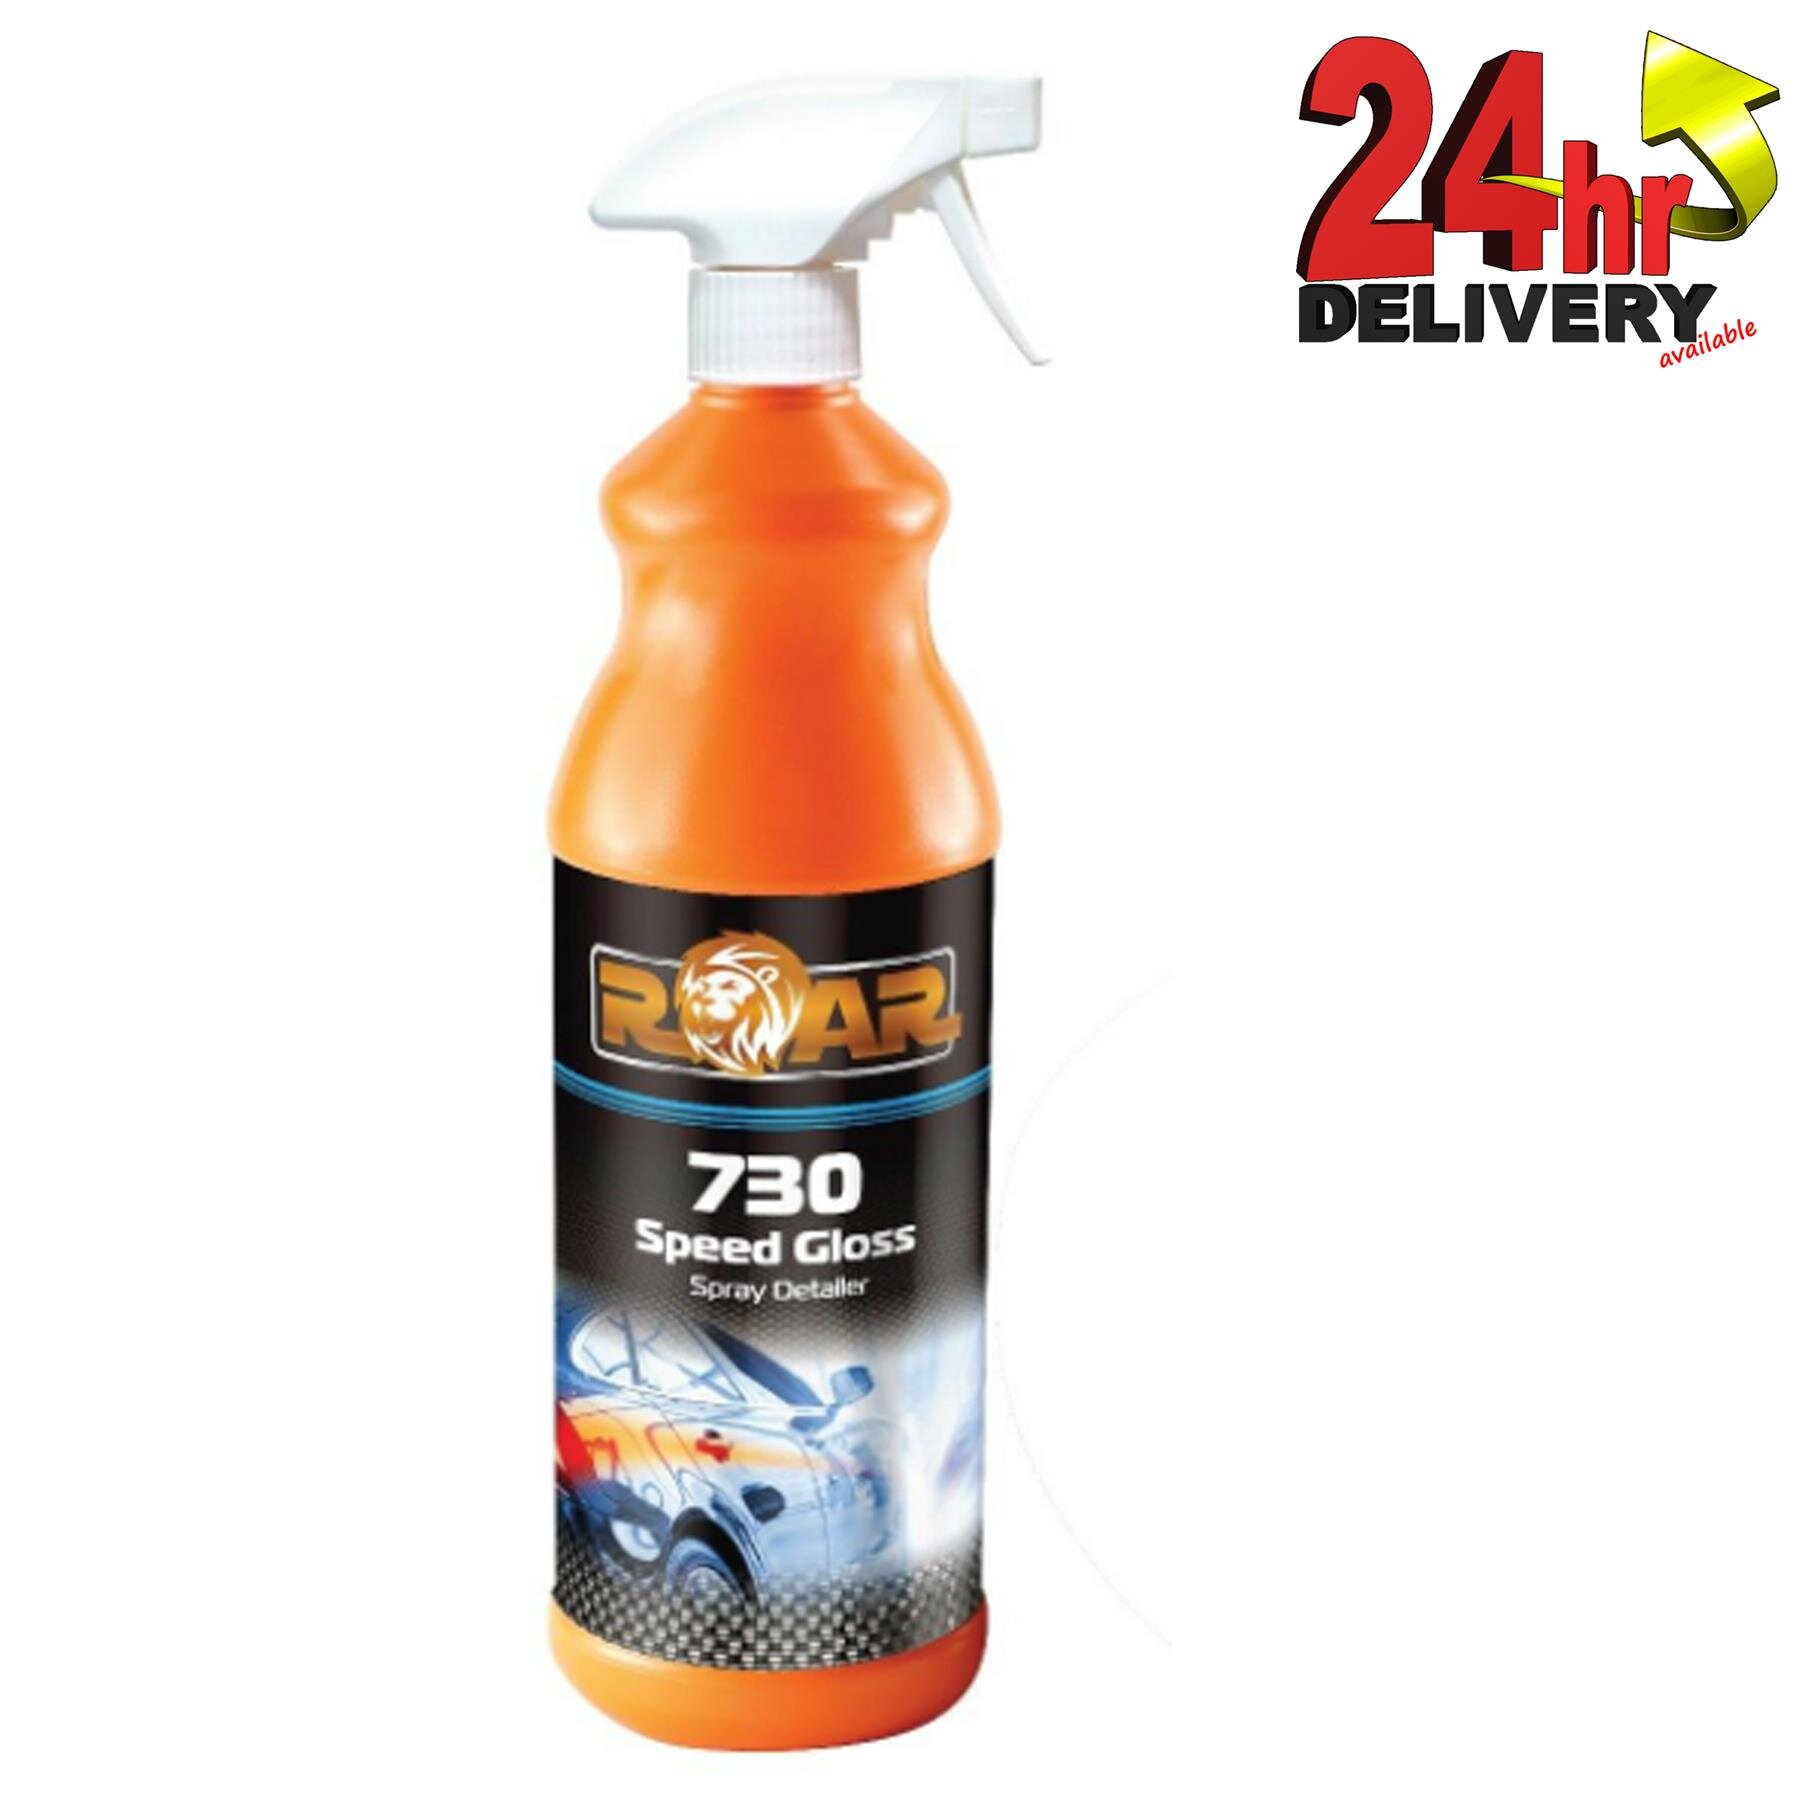 ROAR 730 Speed Gloss Detailer Spray 1L Valeting Polishing Compound